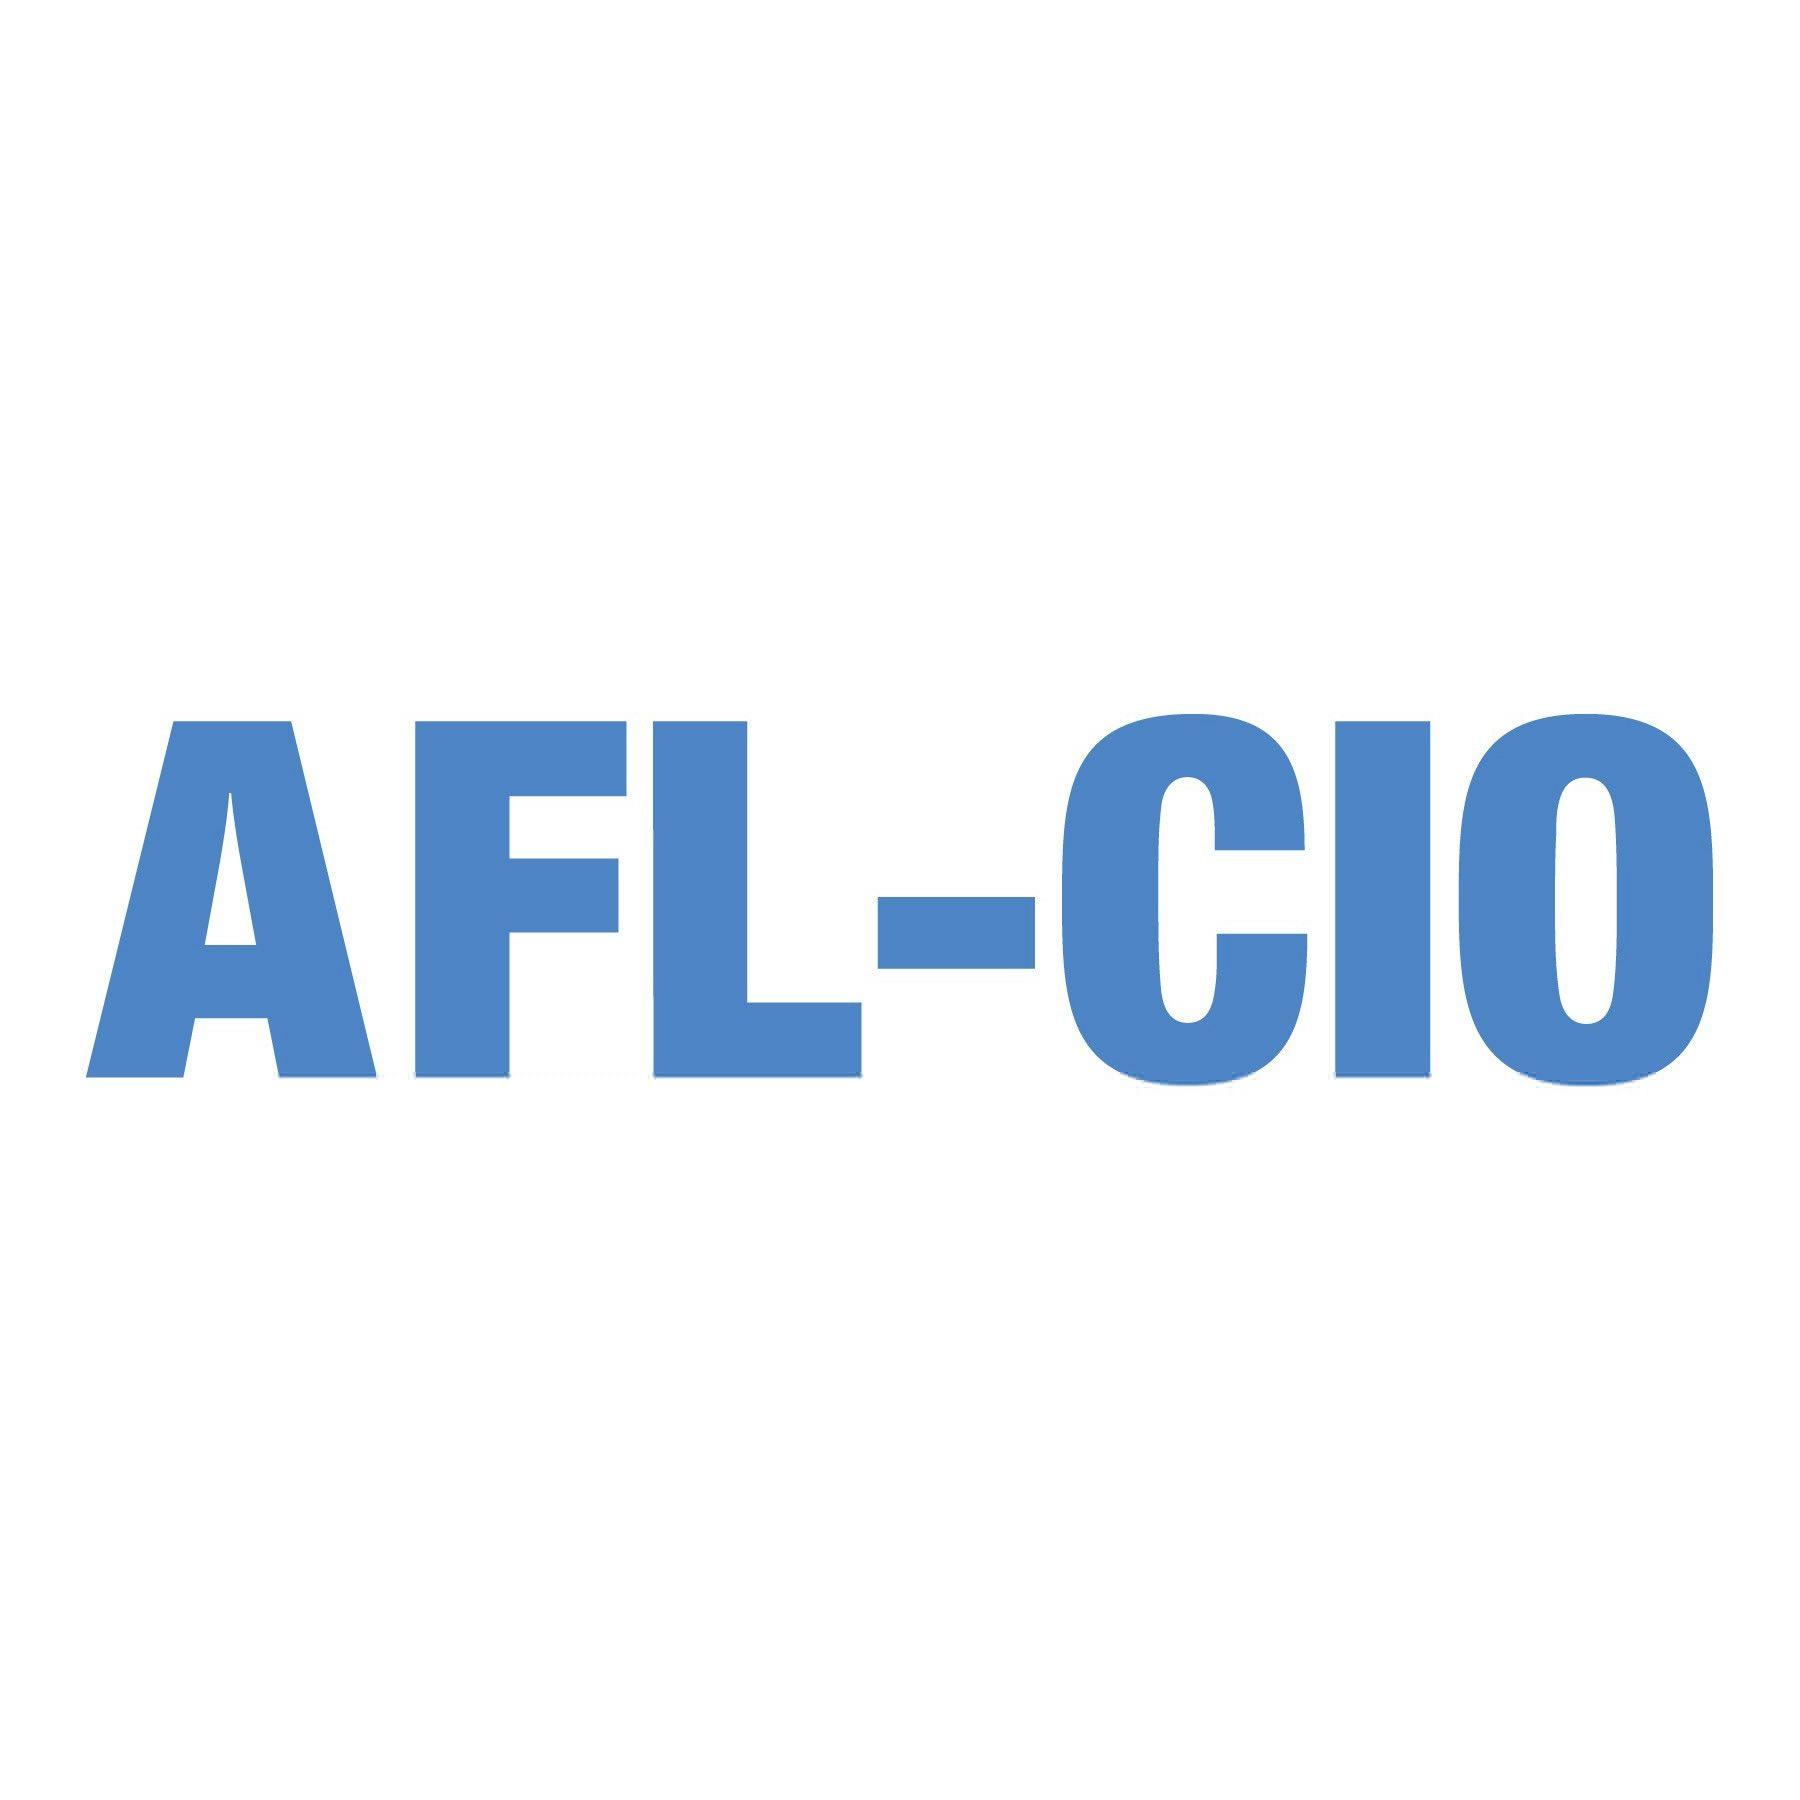 AFL-CIO Logo - Afl cio Logos